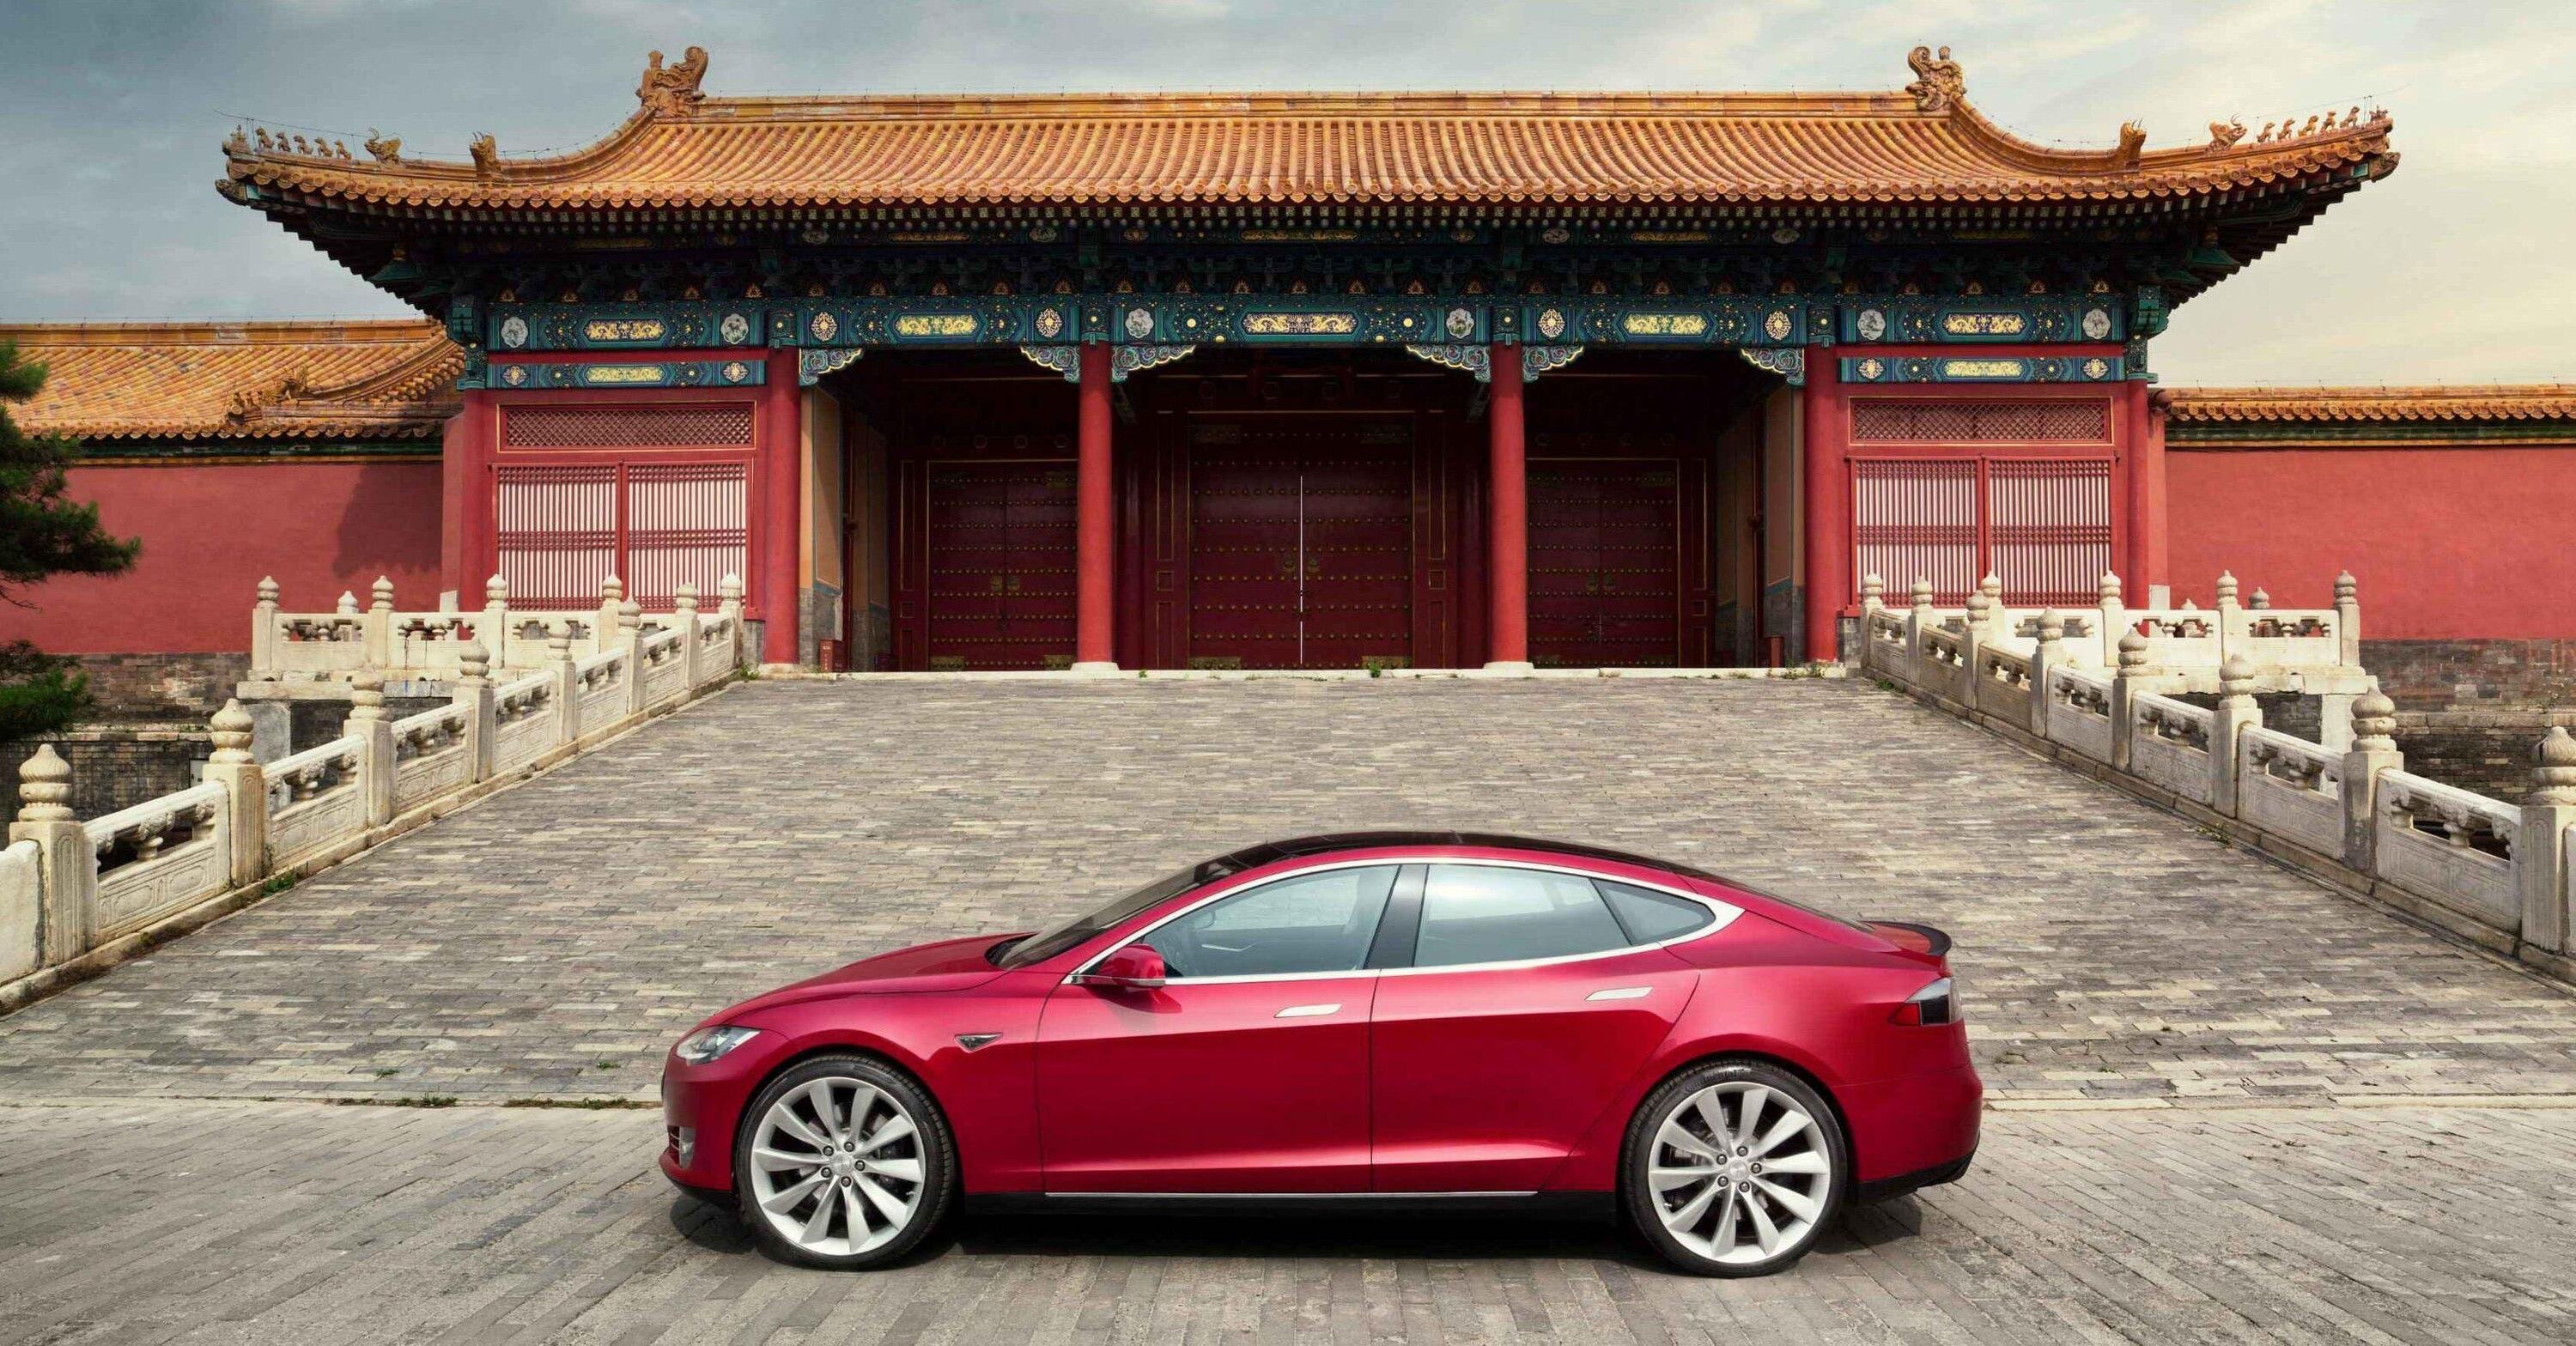 La Tesla - spia preoccupa i cinesi: vietato l&#039;ingresso in citt&agrave;